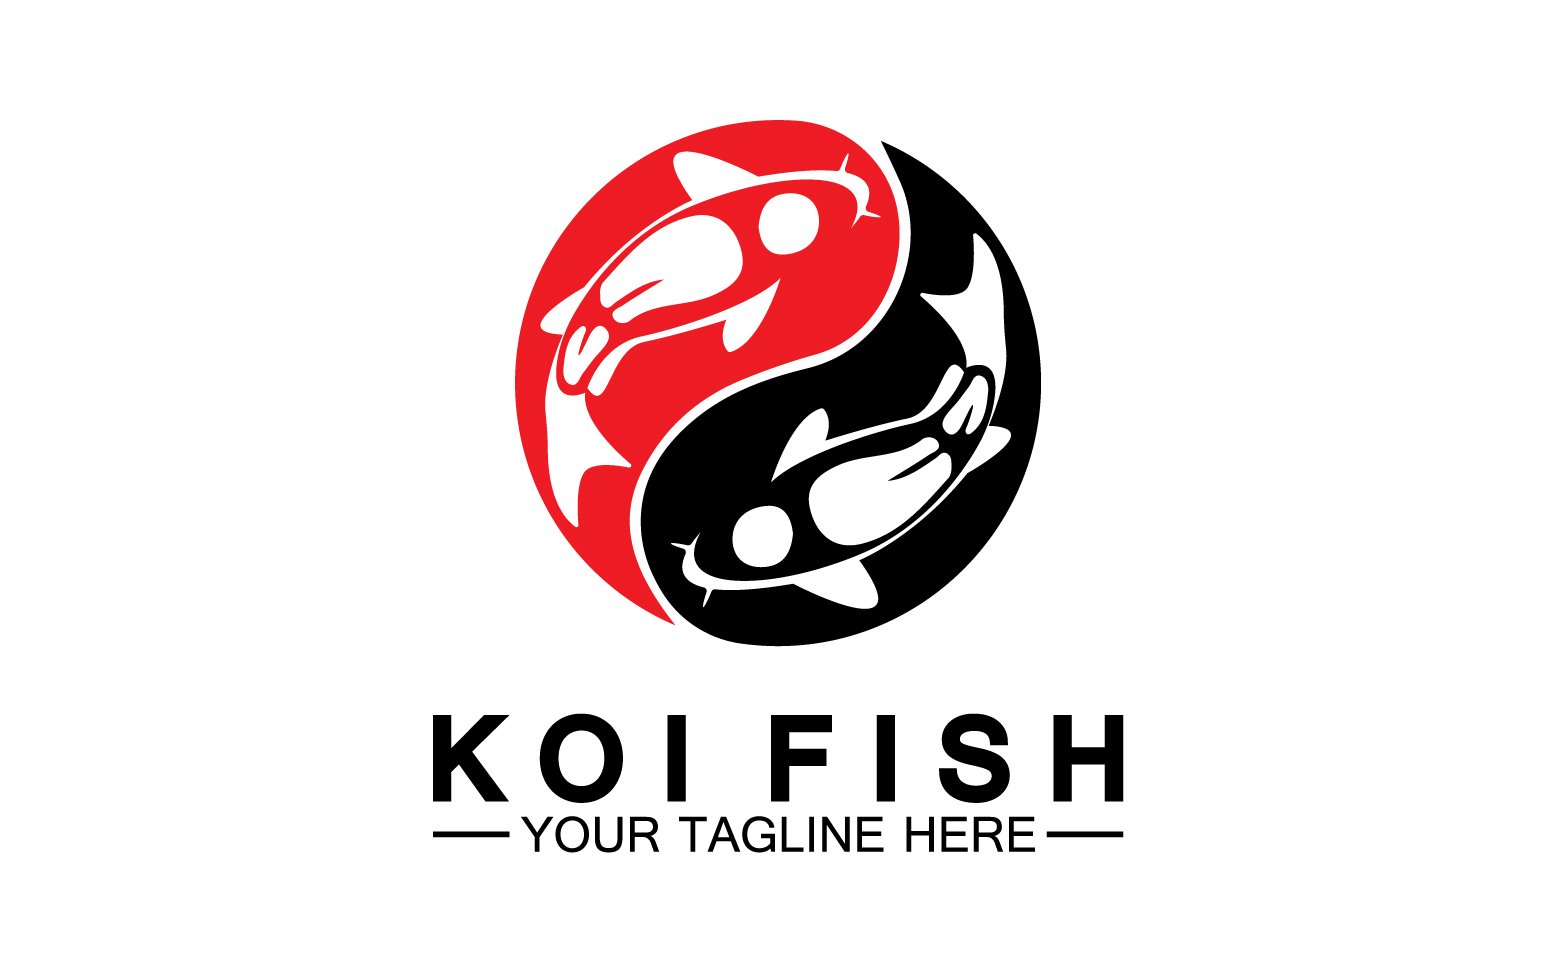 Fish koi black and red icon logo vector v31